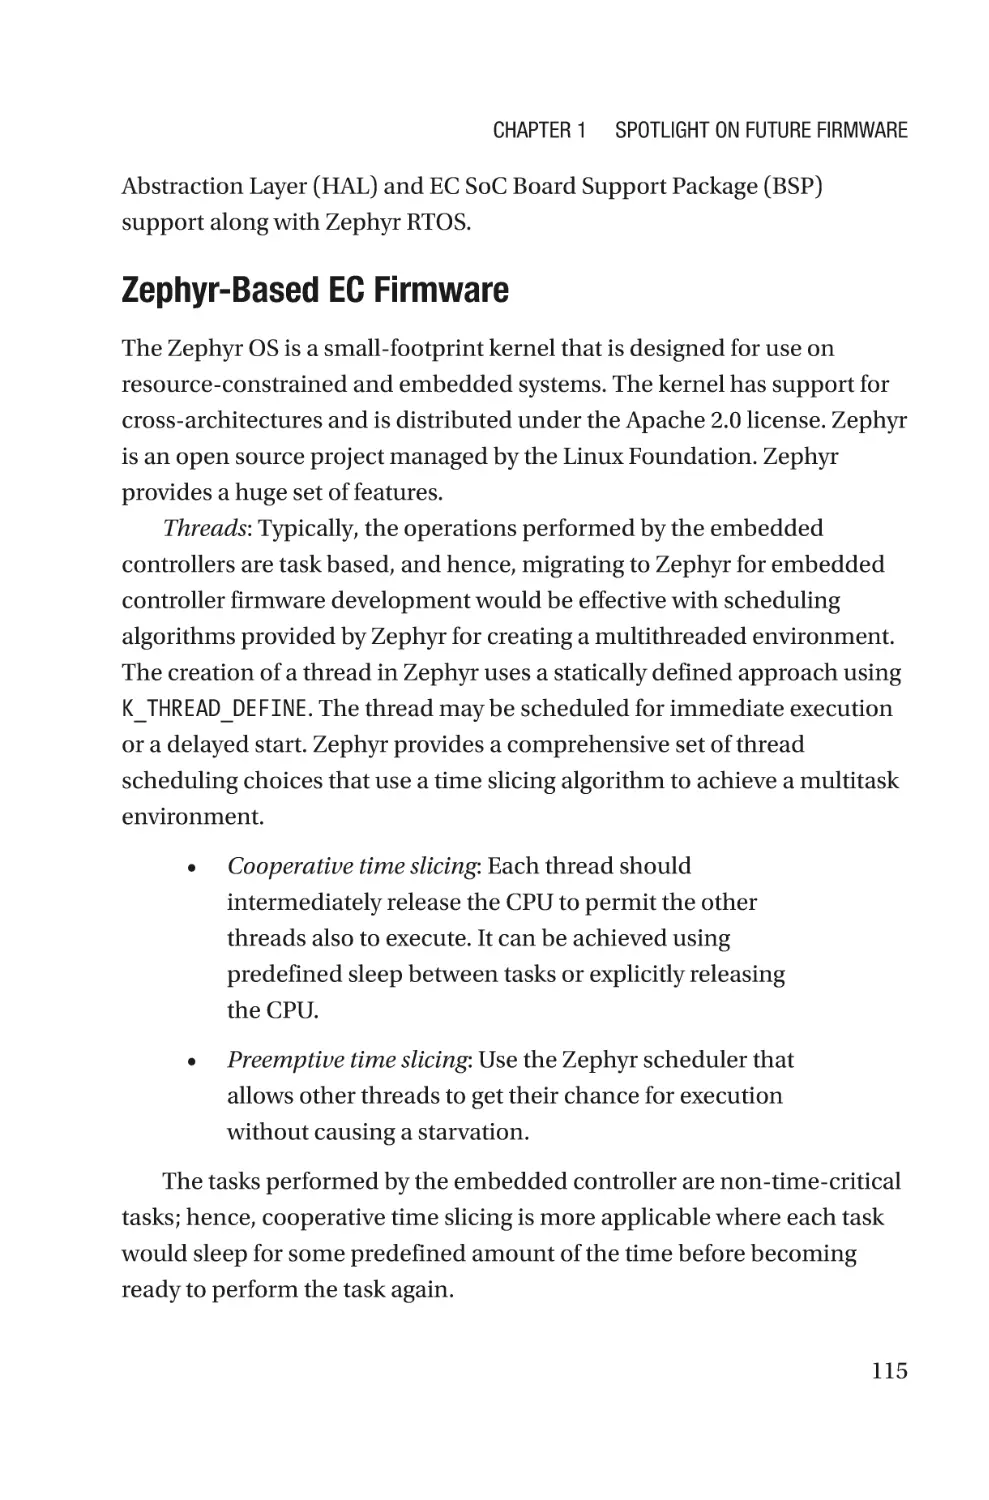 Zephyr-Based EC Firmware